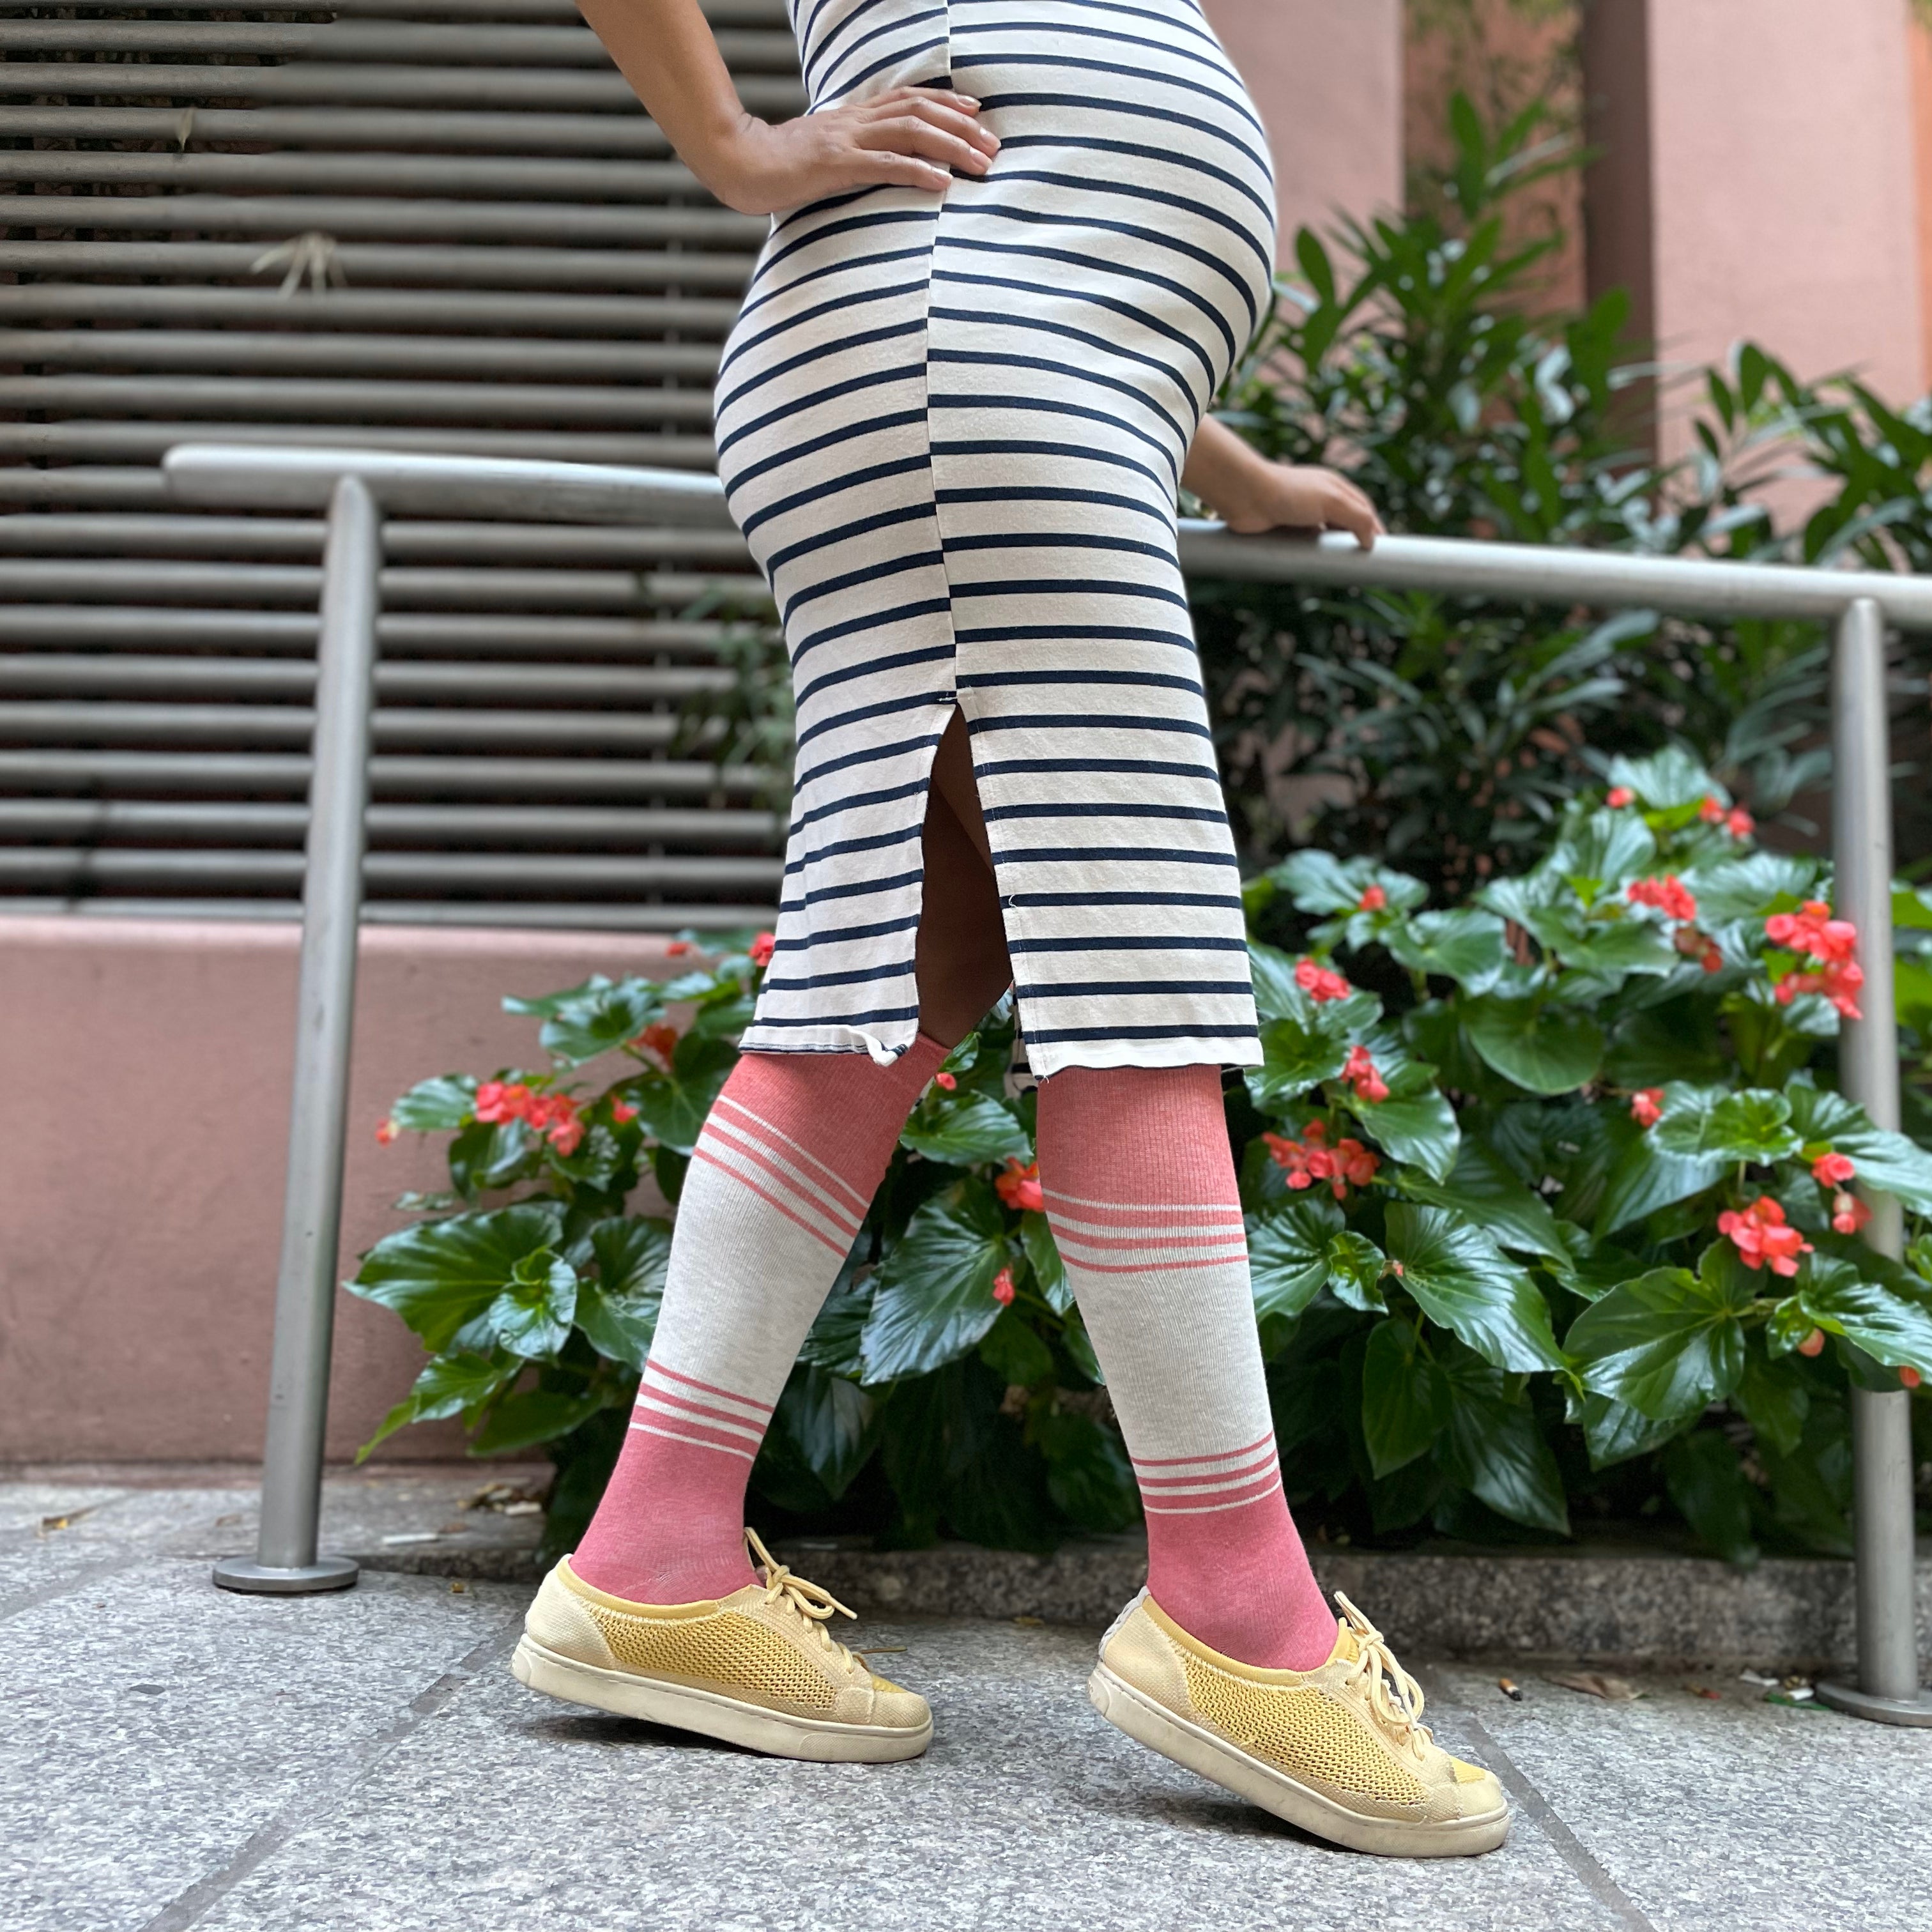 Knee-High Compression Socks For Women, Dr. Motion